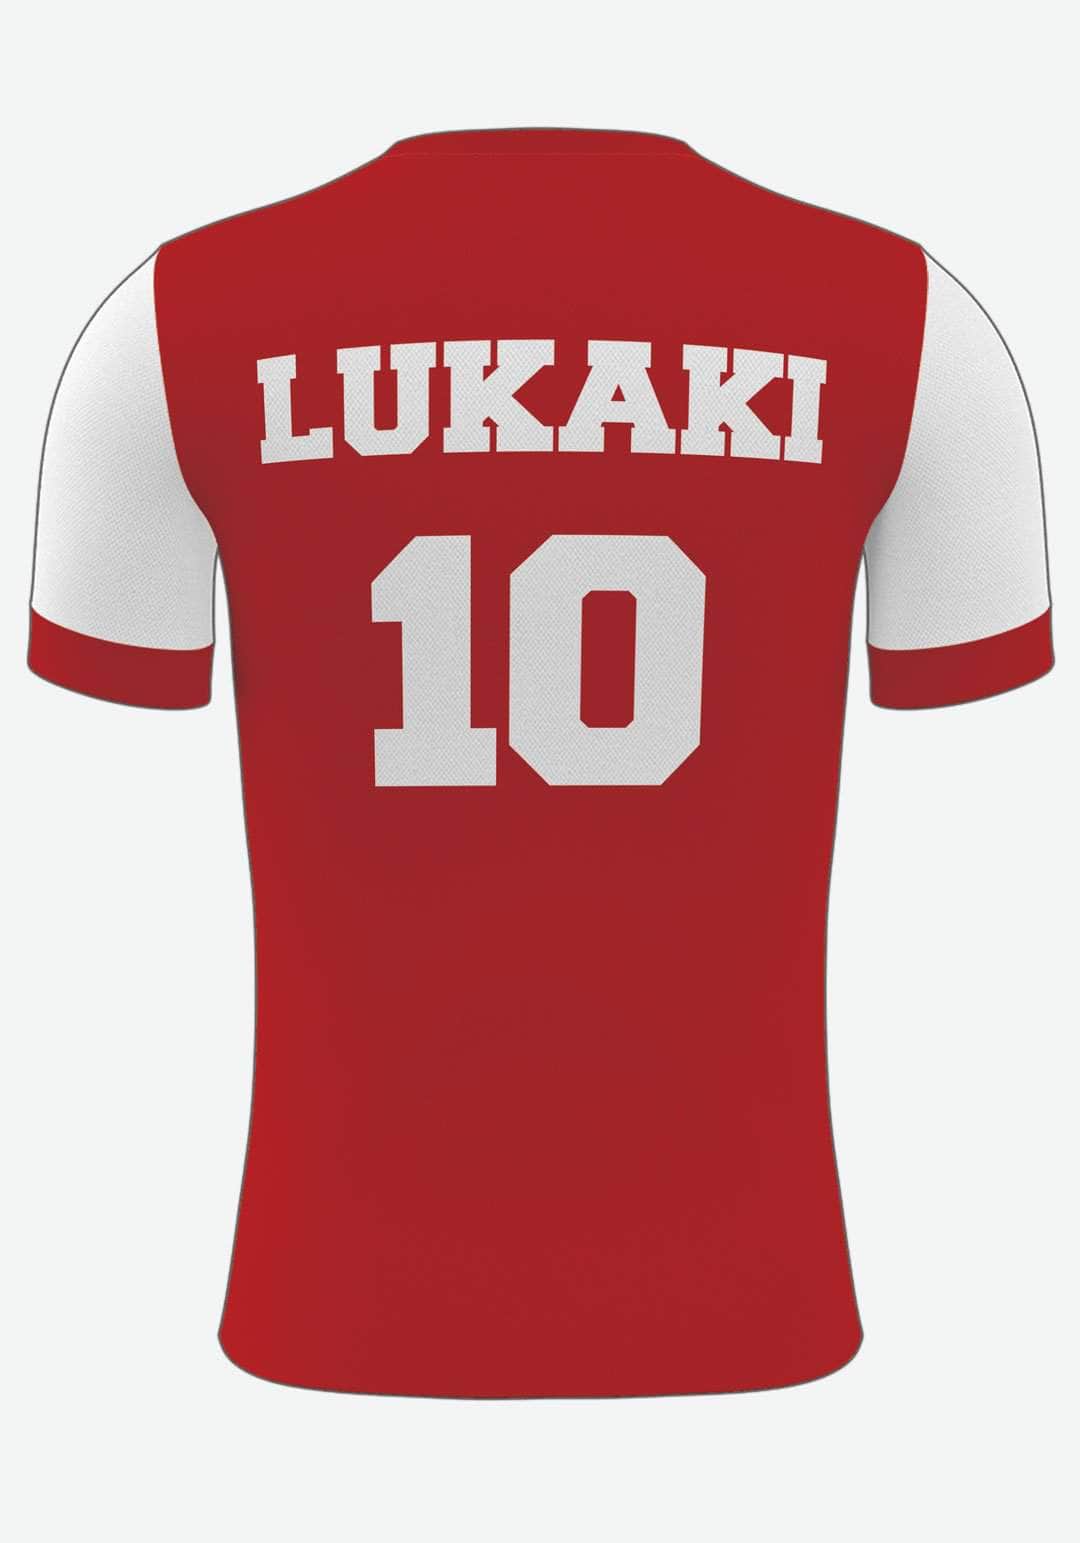 Se Arsenal Fodboldplakat - med eget navn og nummer, 30x40 hos Lukaki.dk